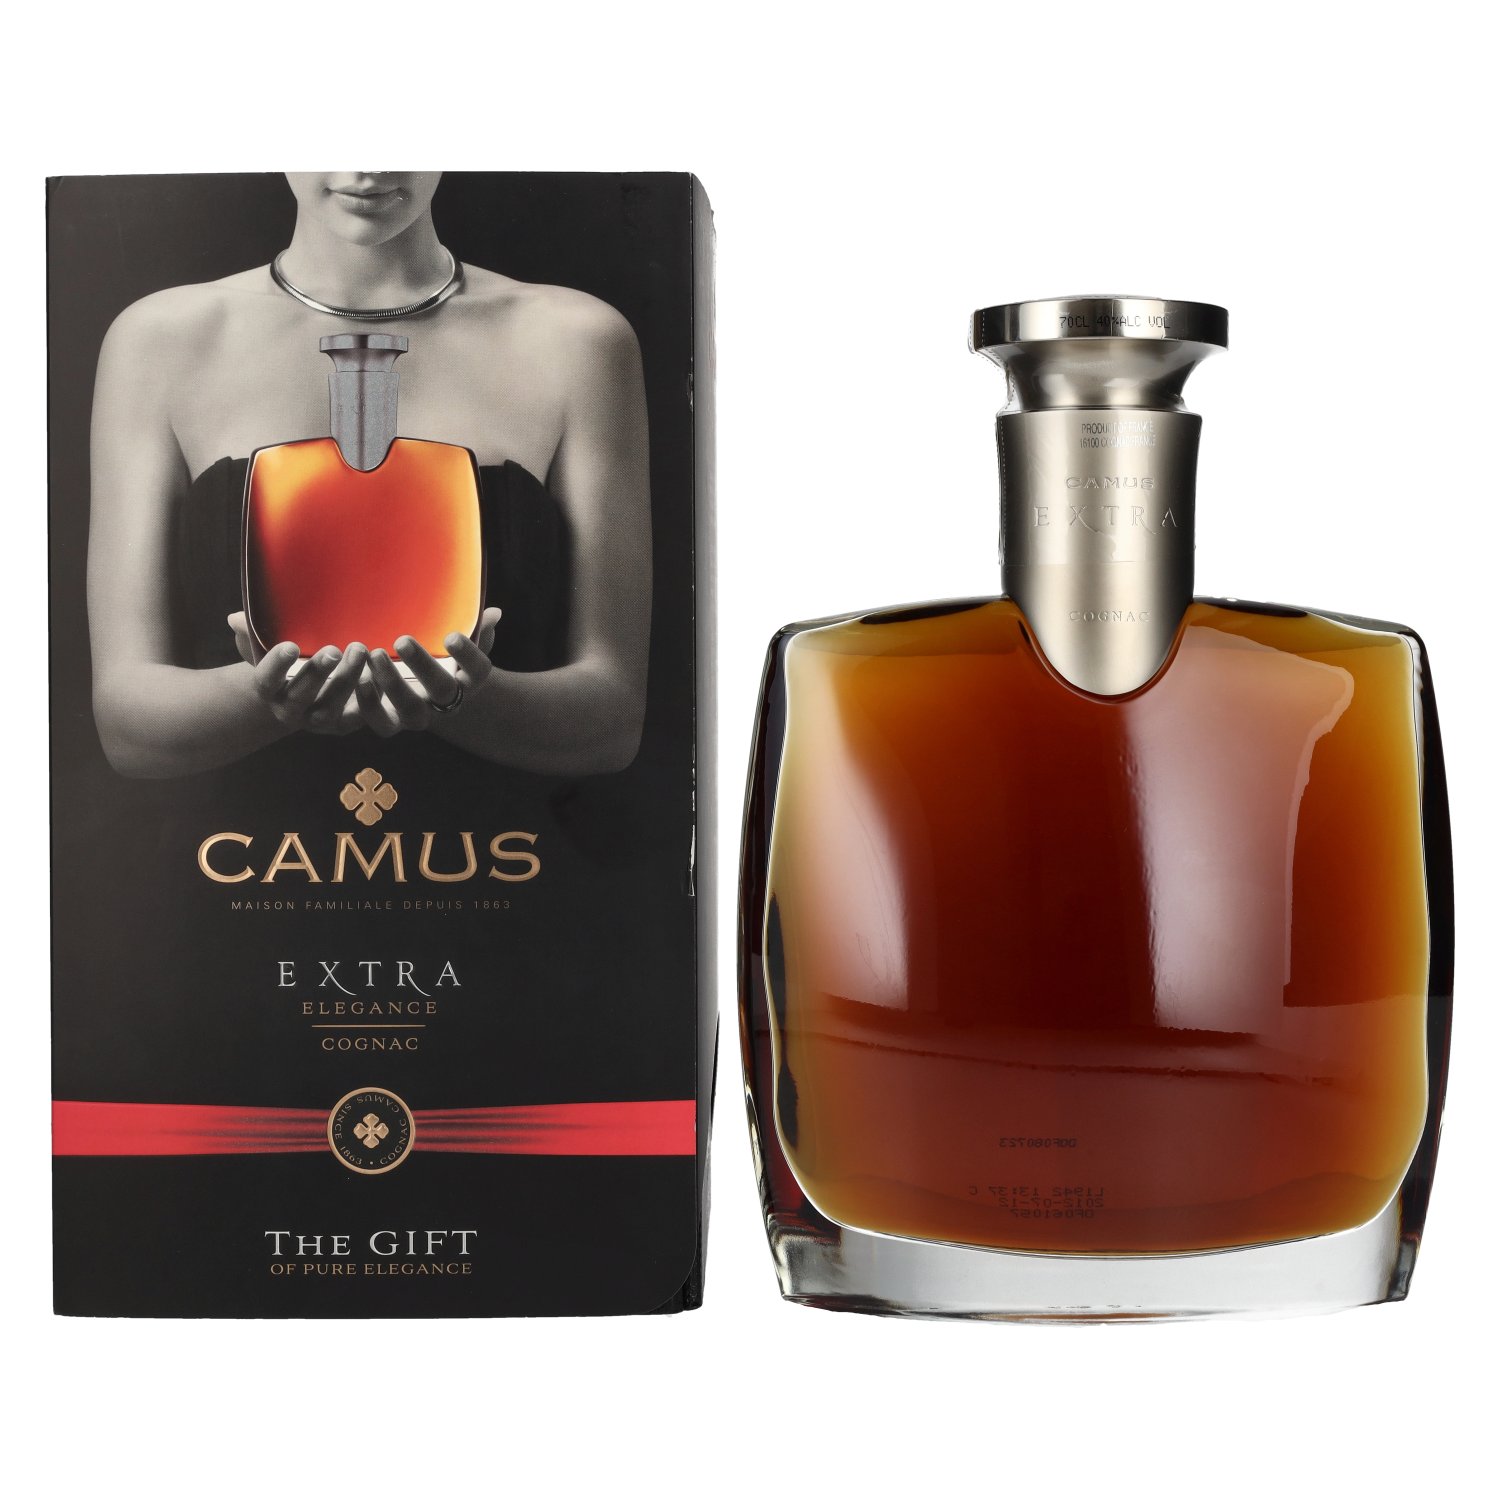 CAMUS EXTRA COGNAC 70cl - 飲料/酒